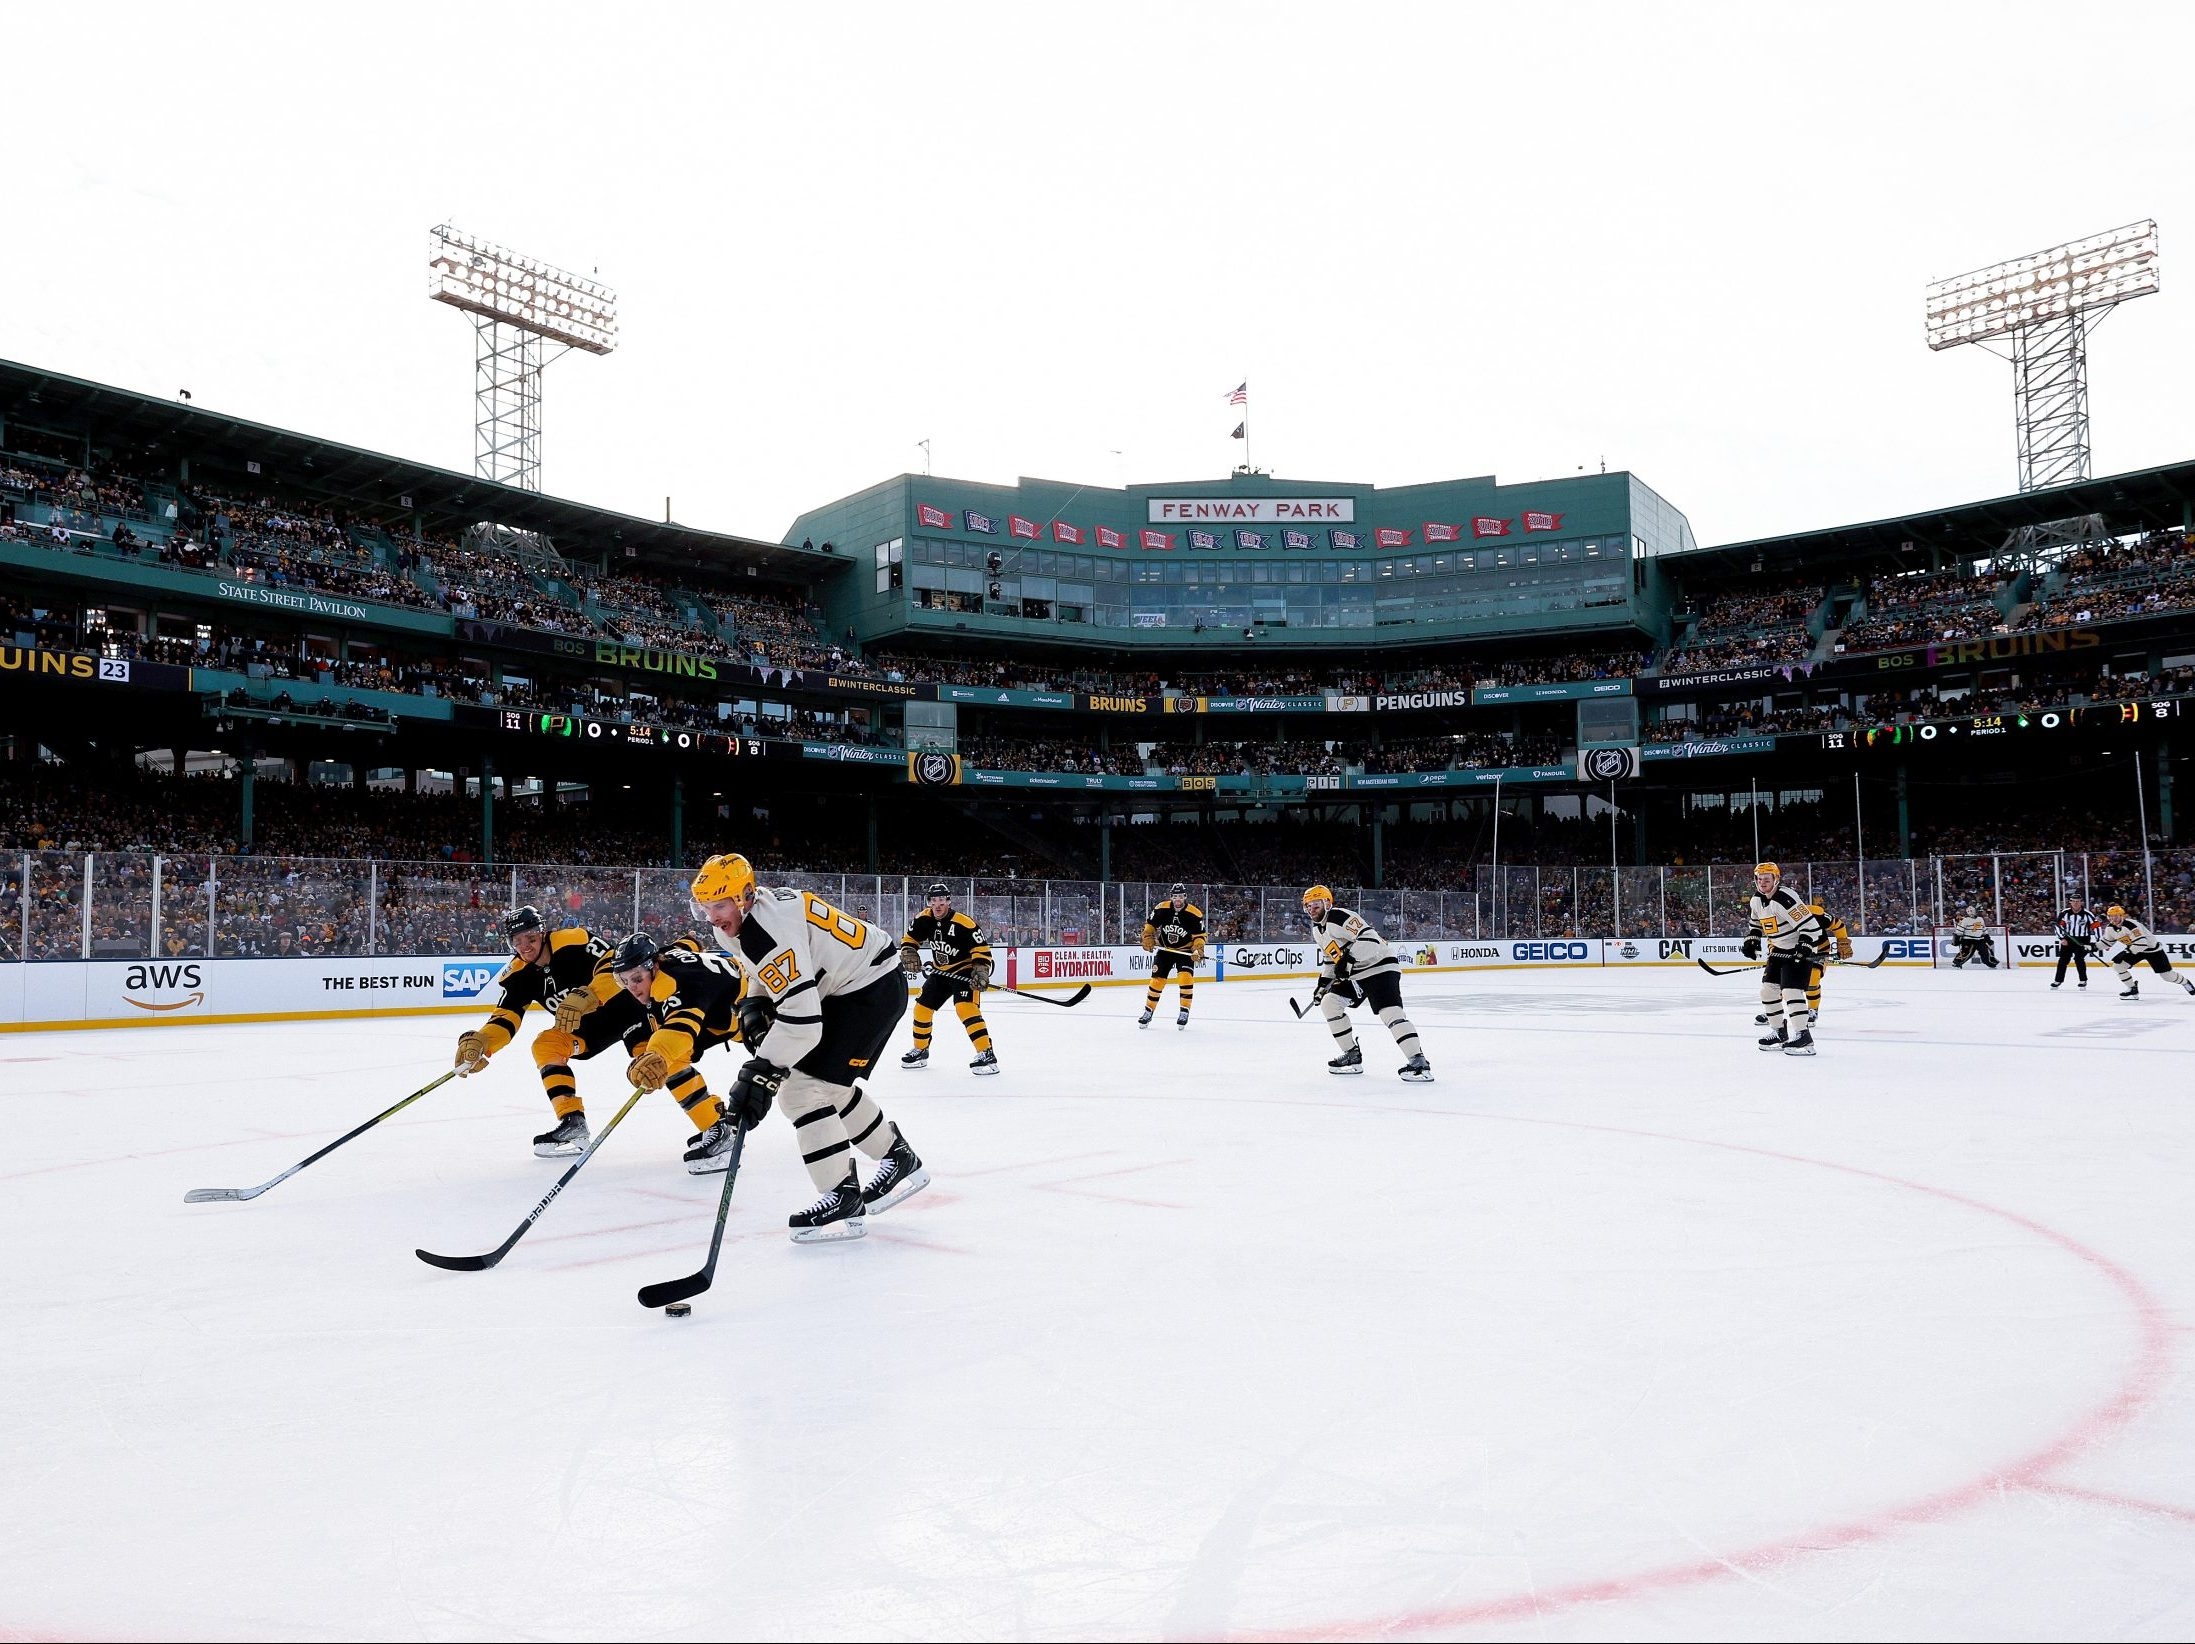 Fenway Park perfect host for Winter Classic between Bruins, Penguins